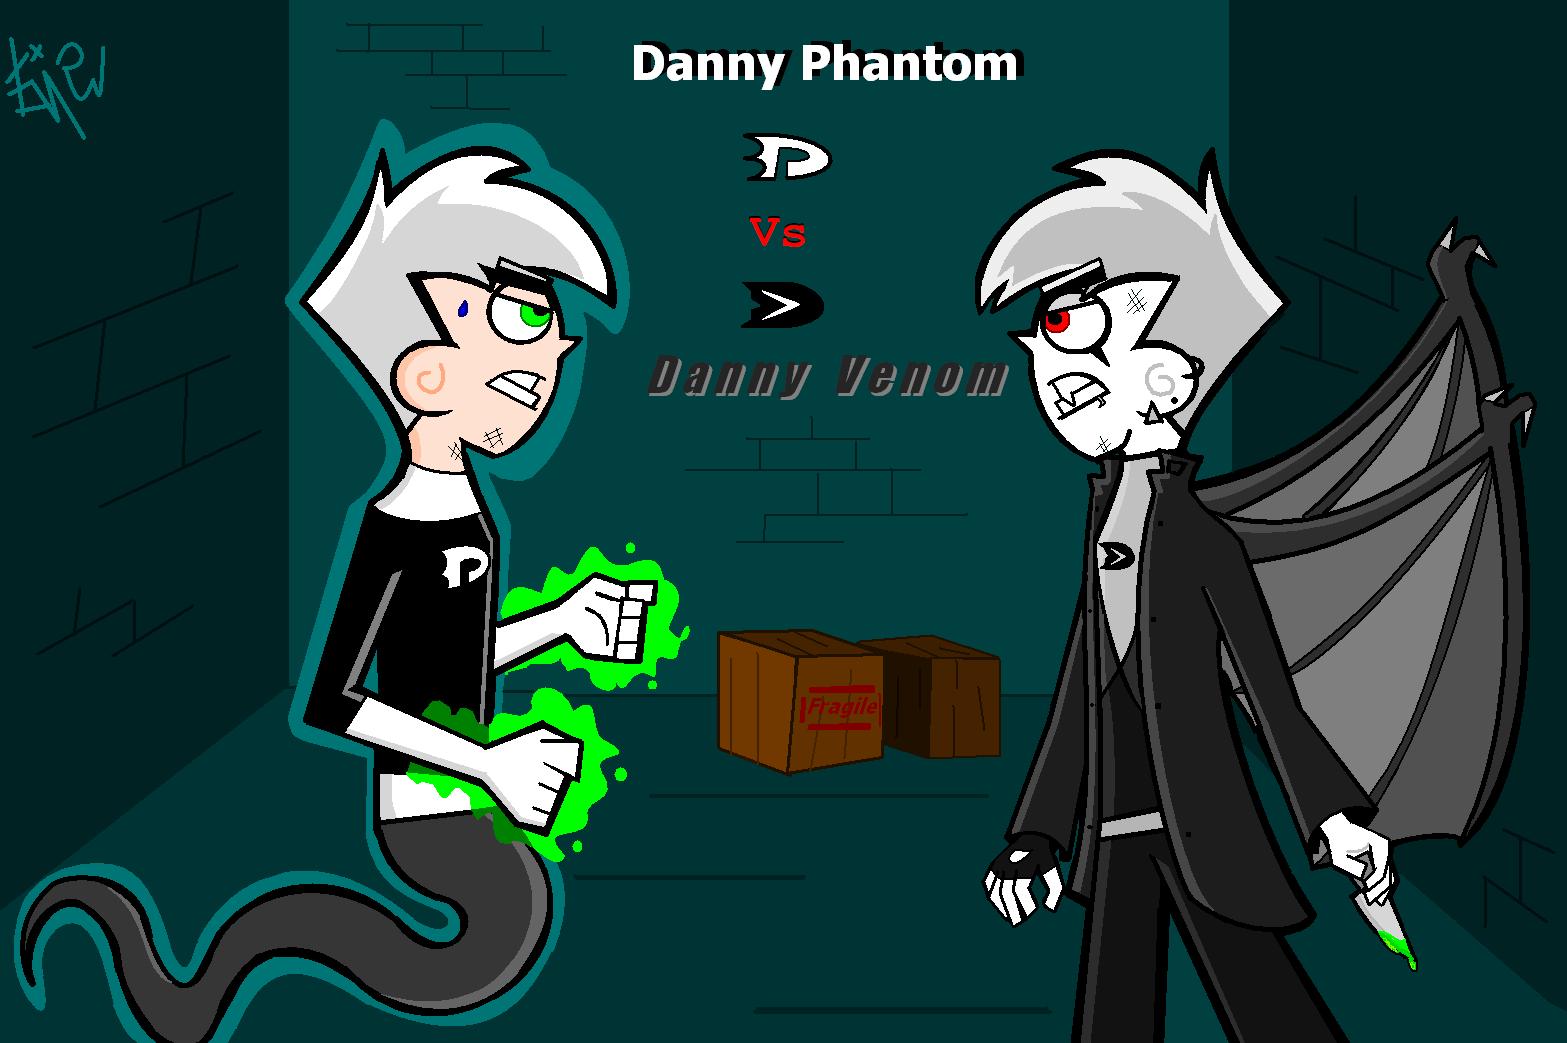 Danny Phantom Vs Danny Venom by TwilightZone